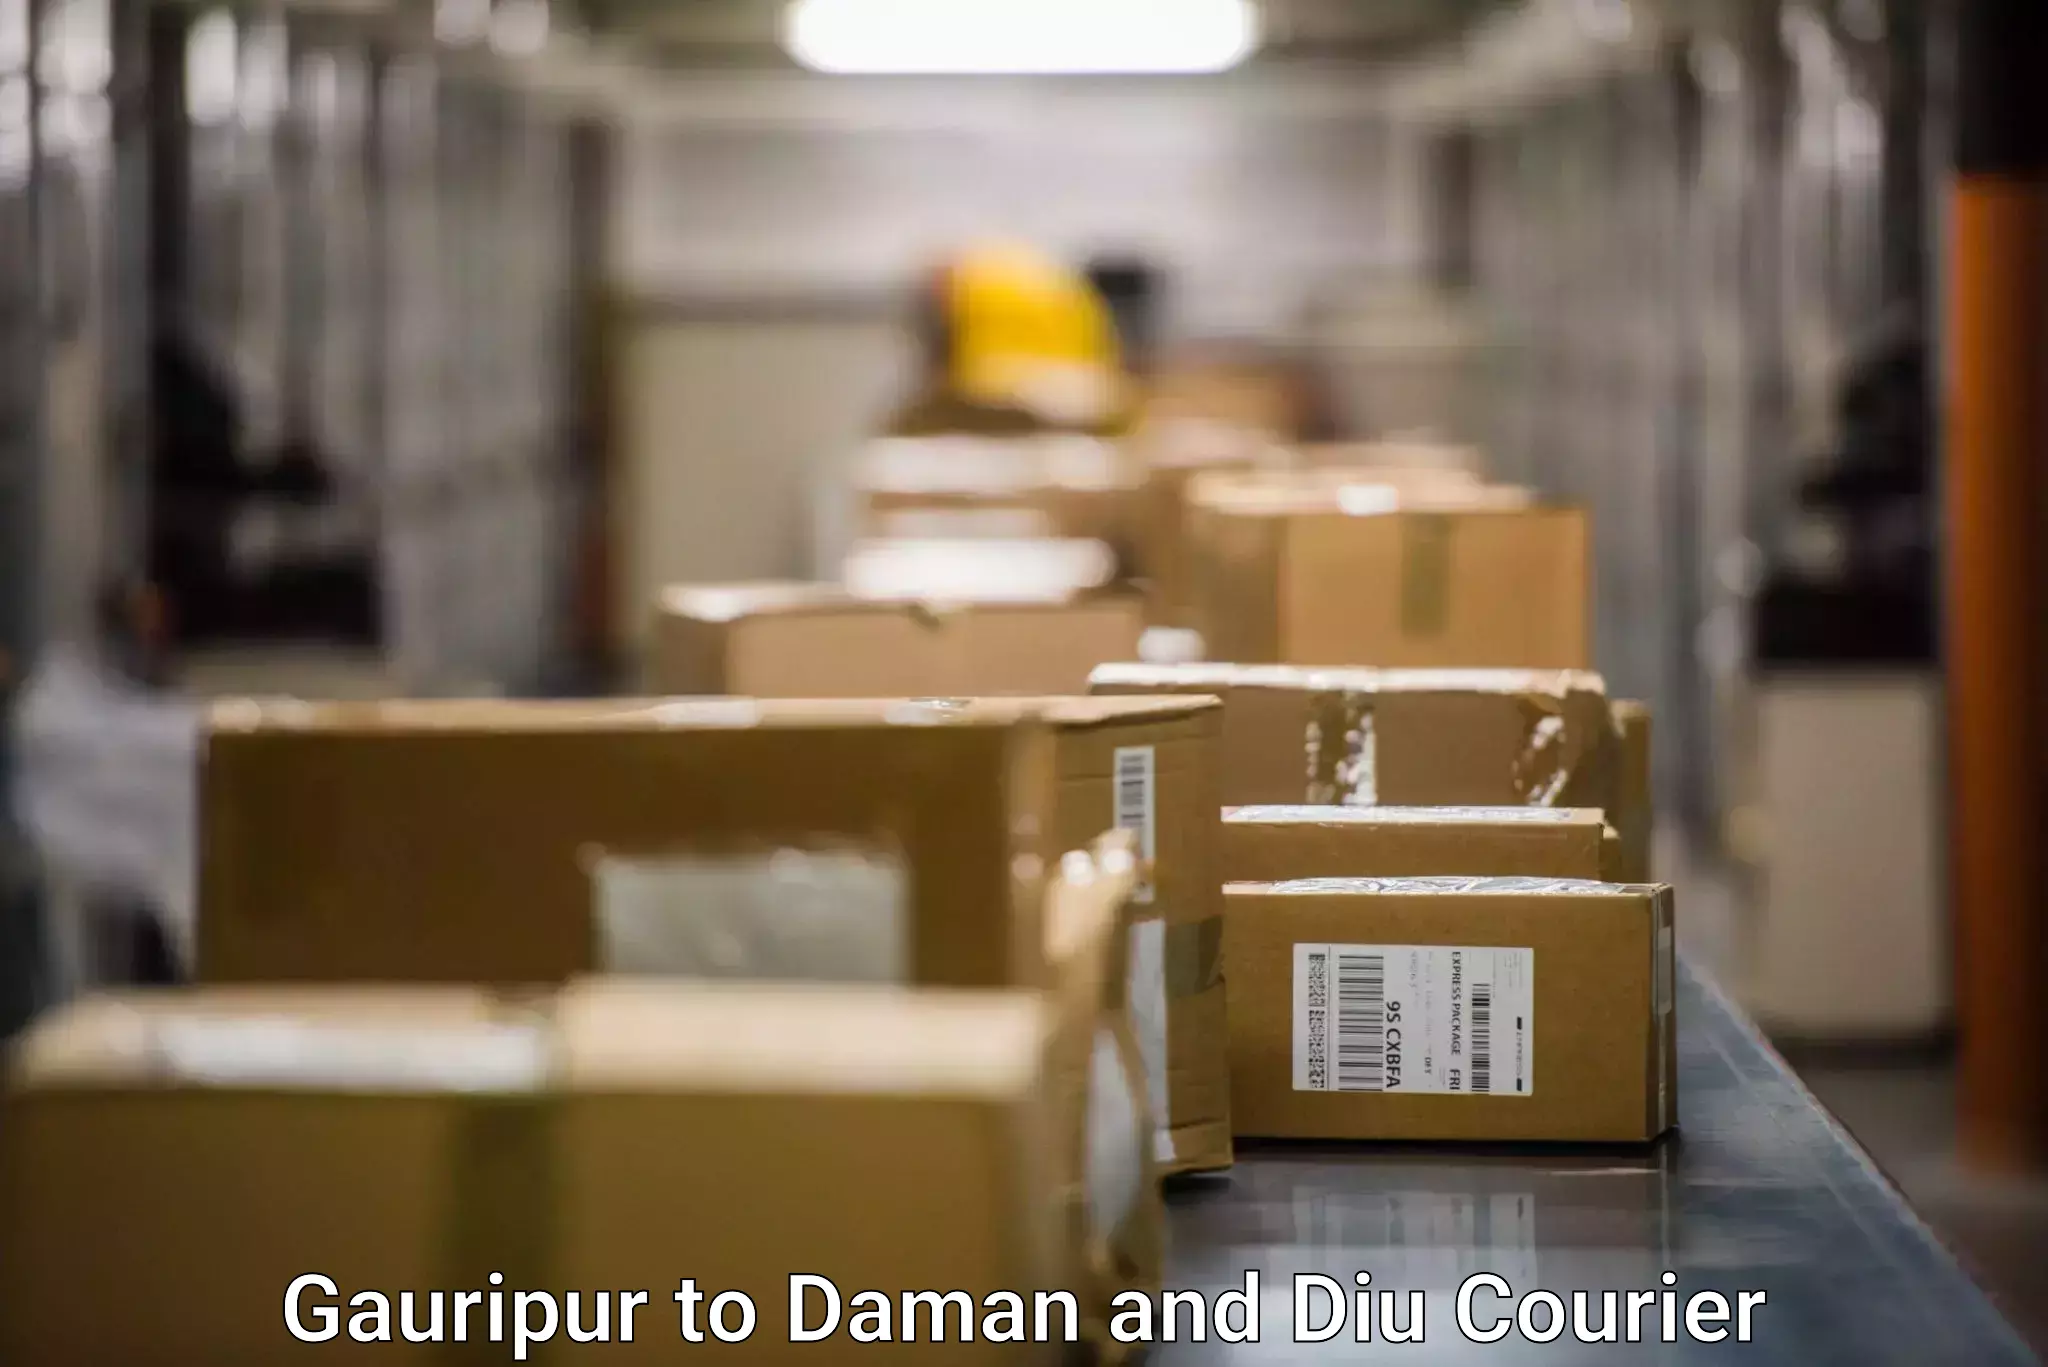 Tech-enabled shipping Gauripur to Diu